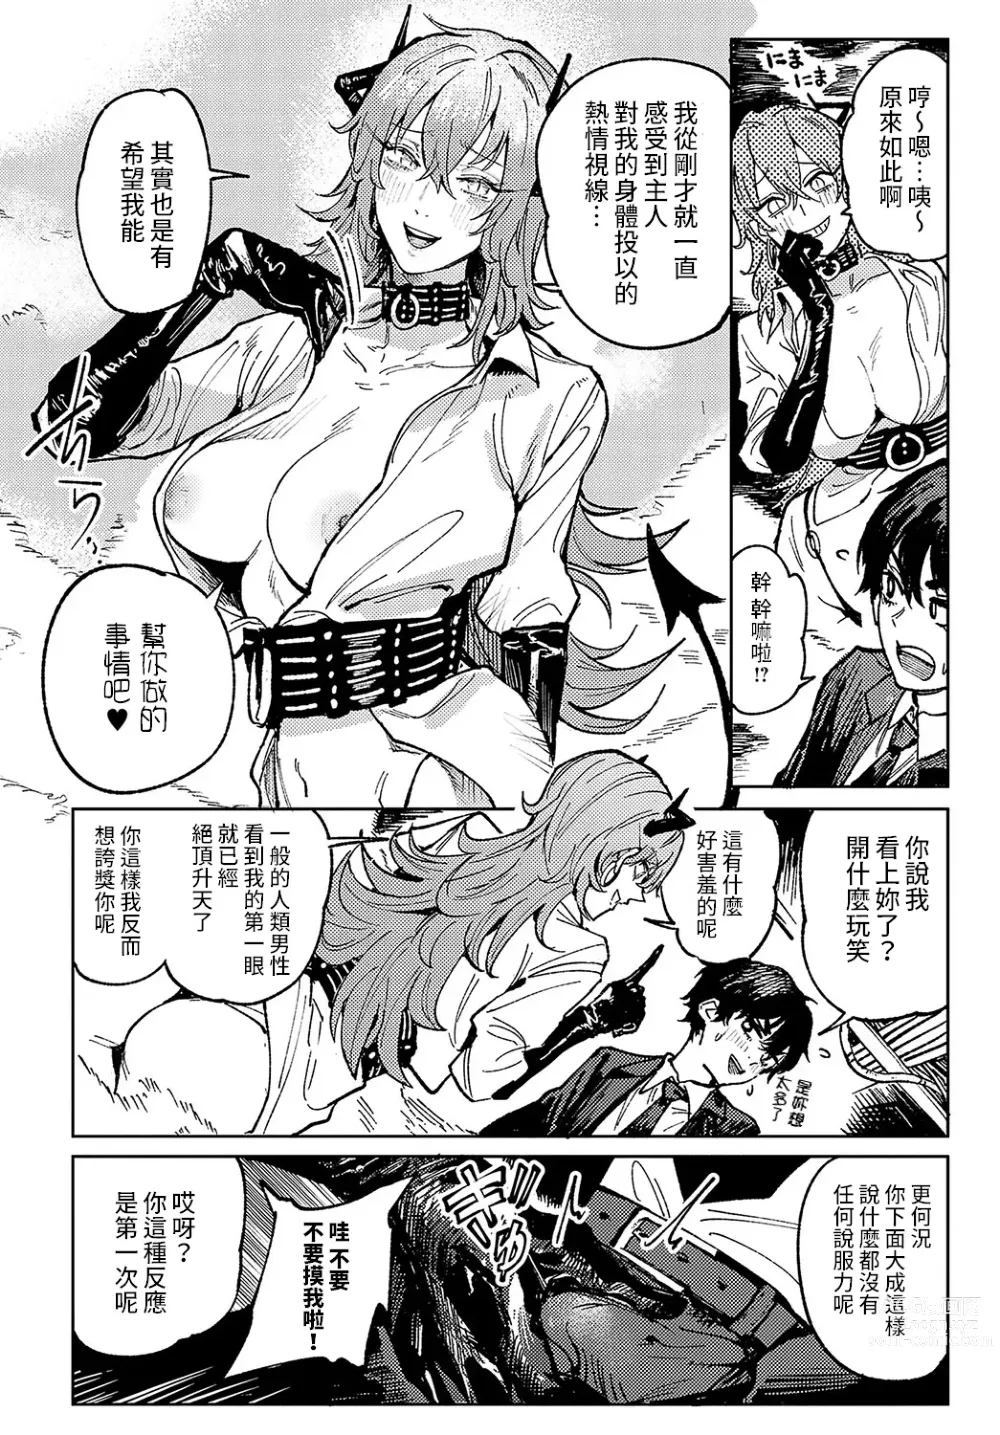 Page 6 of manga Youran Makou